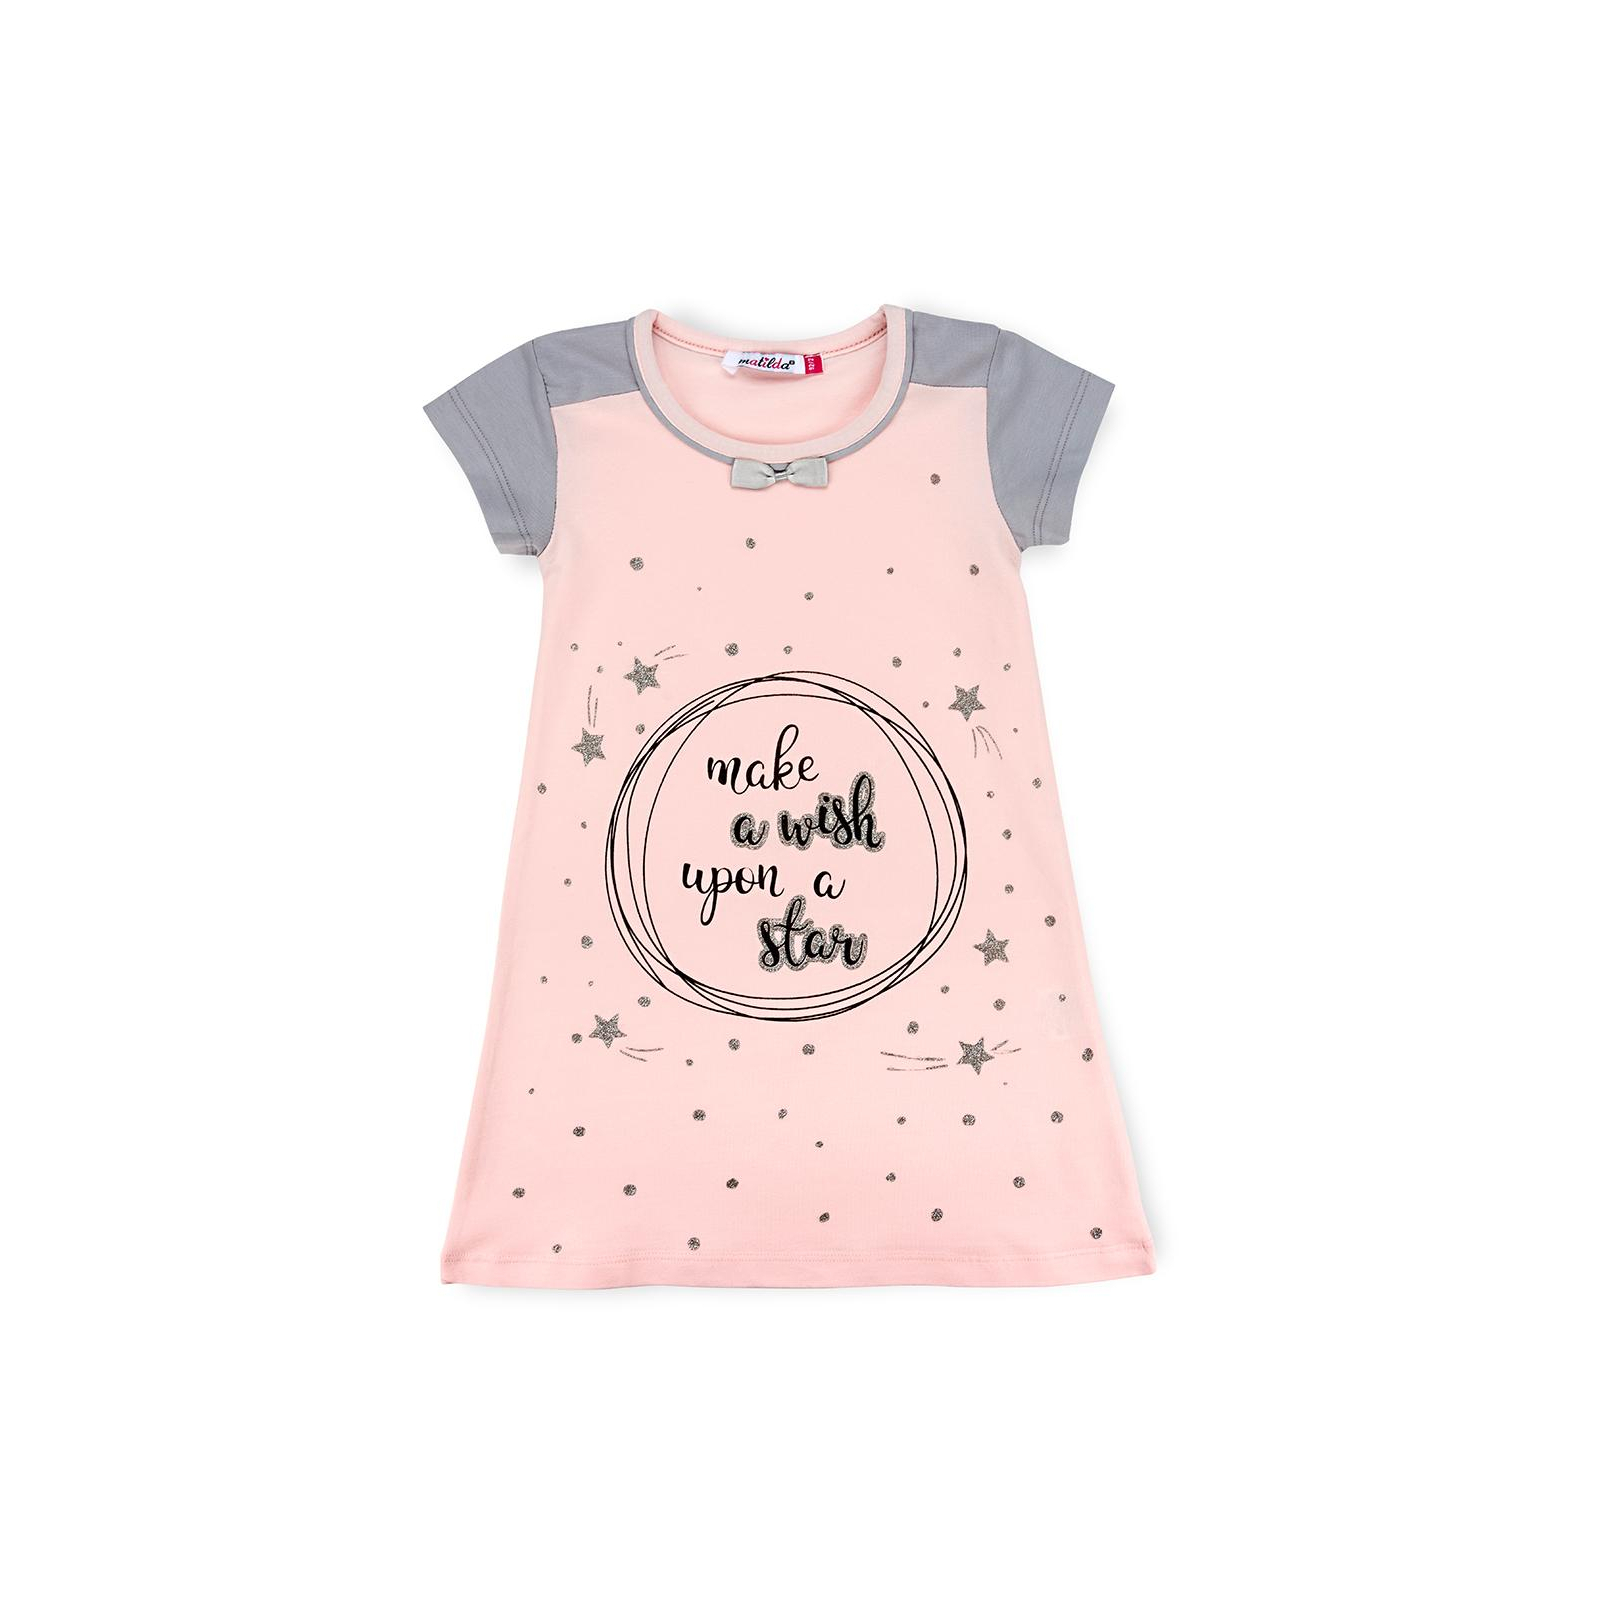 Піжама Matilda сорочка Із зірочкамі (7992-2-110G-pink)